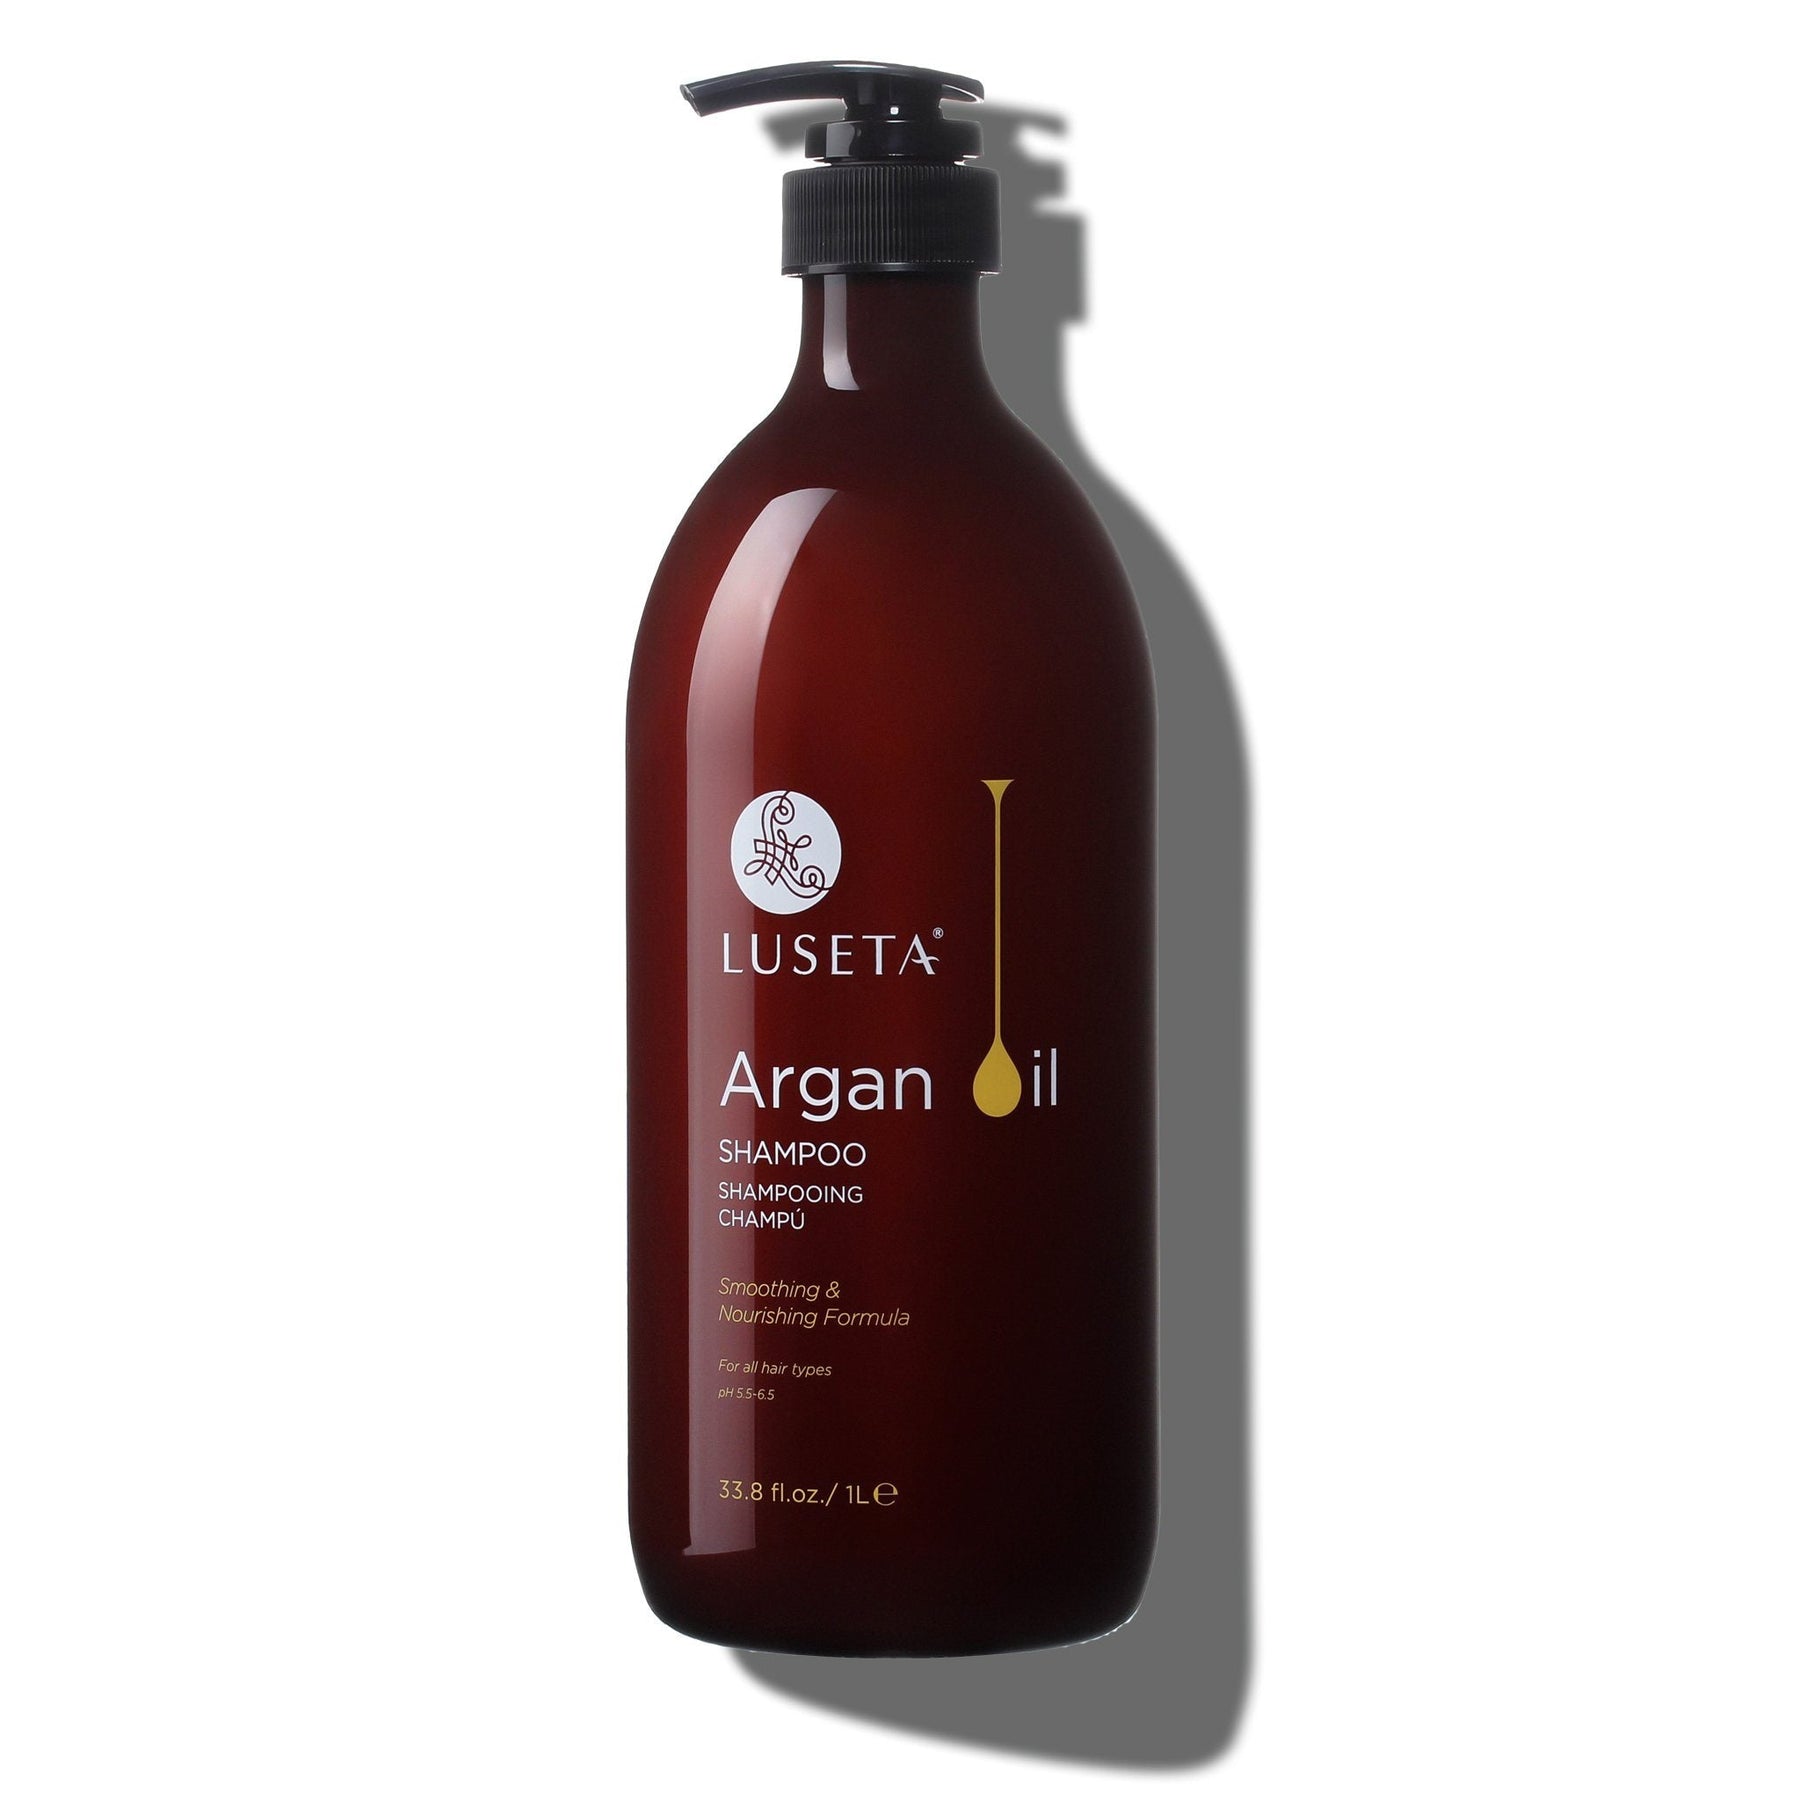 Argan Oil Shampoo - 33.8oz - by Luseta Beauty |ProCare Outlet|